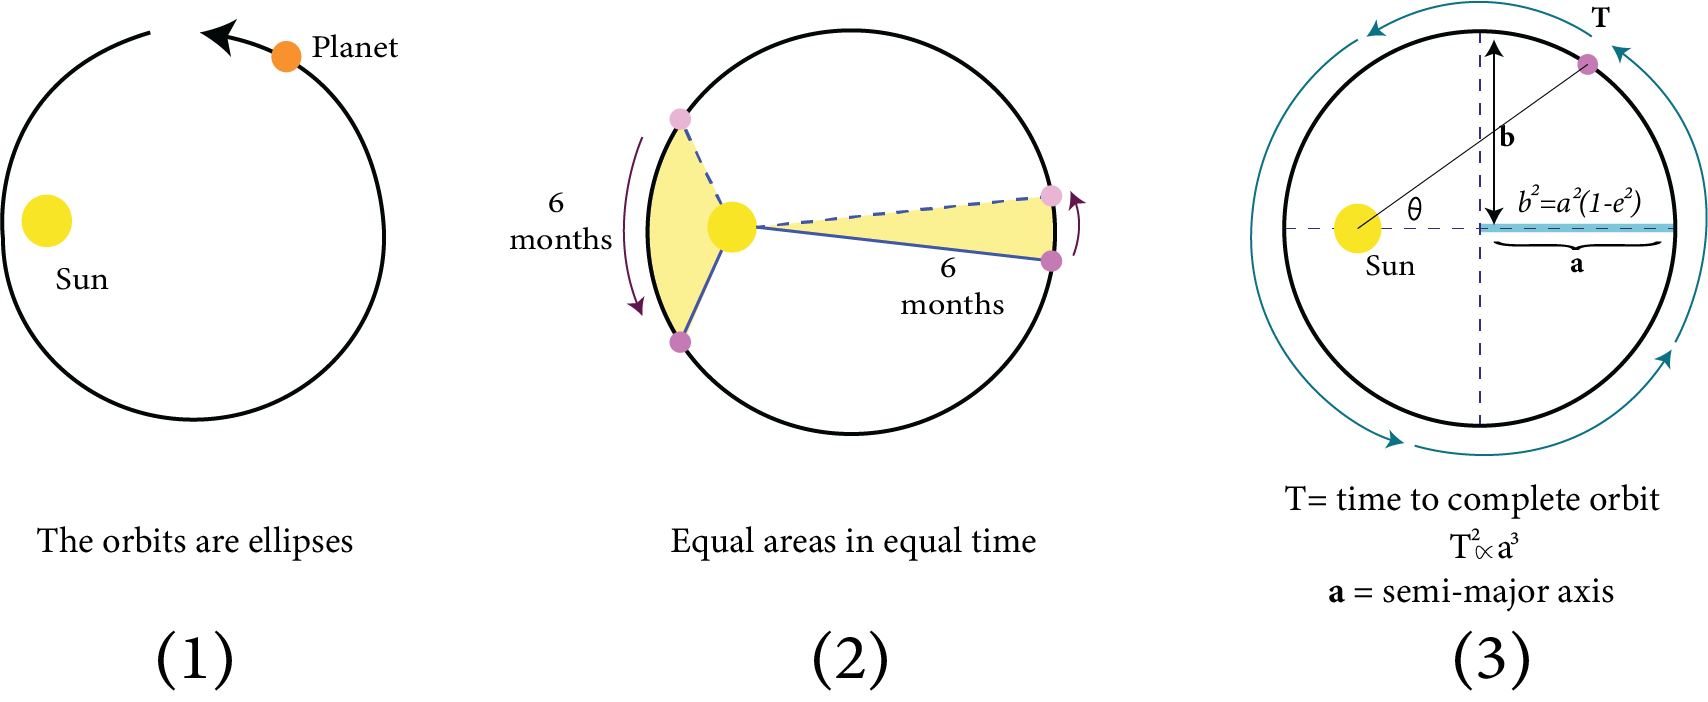 Kepler’s Laws of Planetary Motion